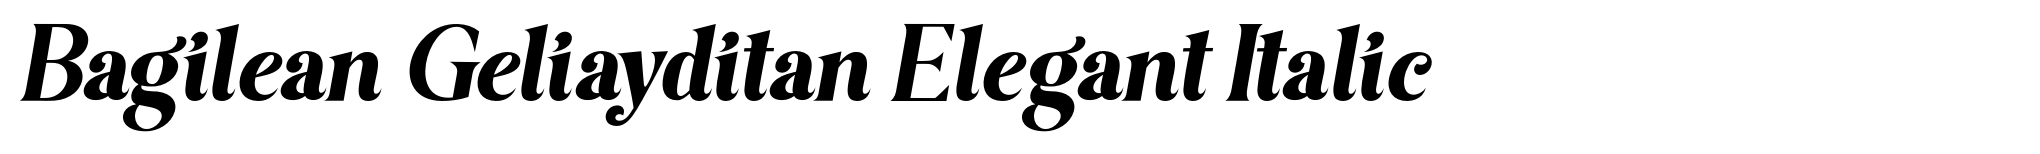 Bagilean Geliayditan Elegant Italic image